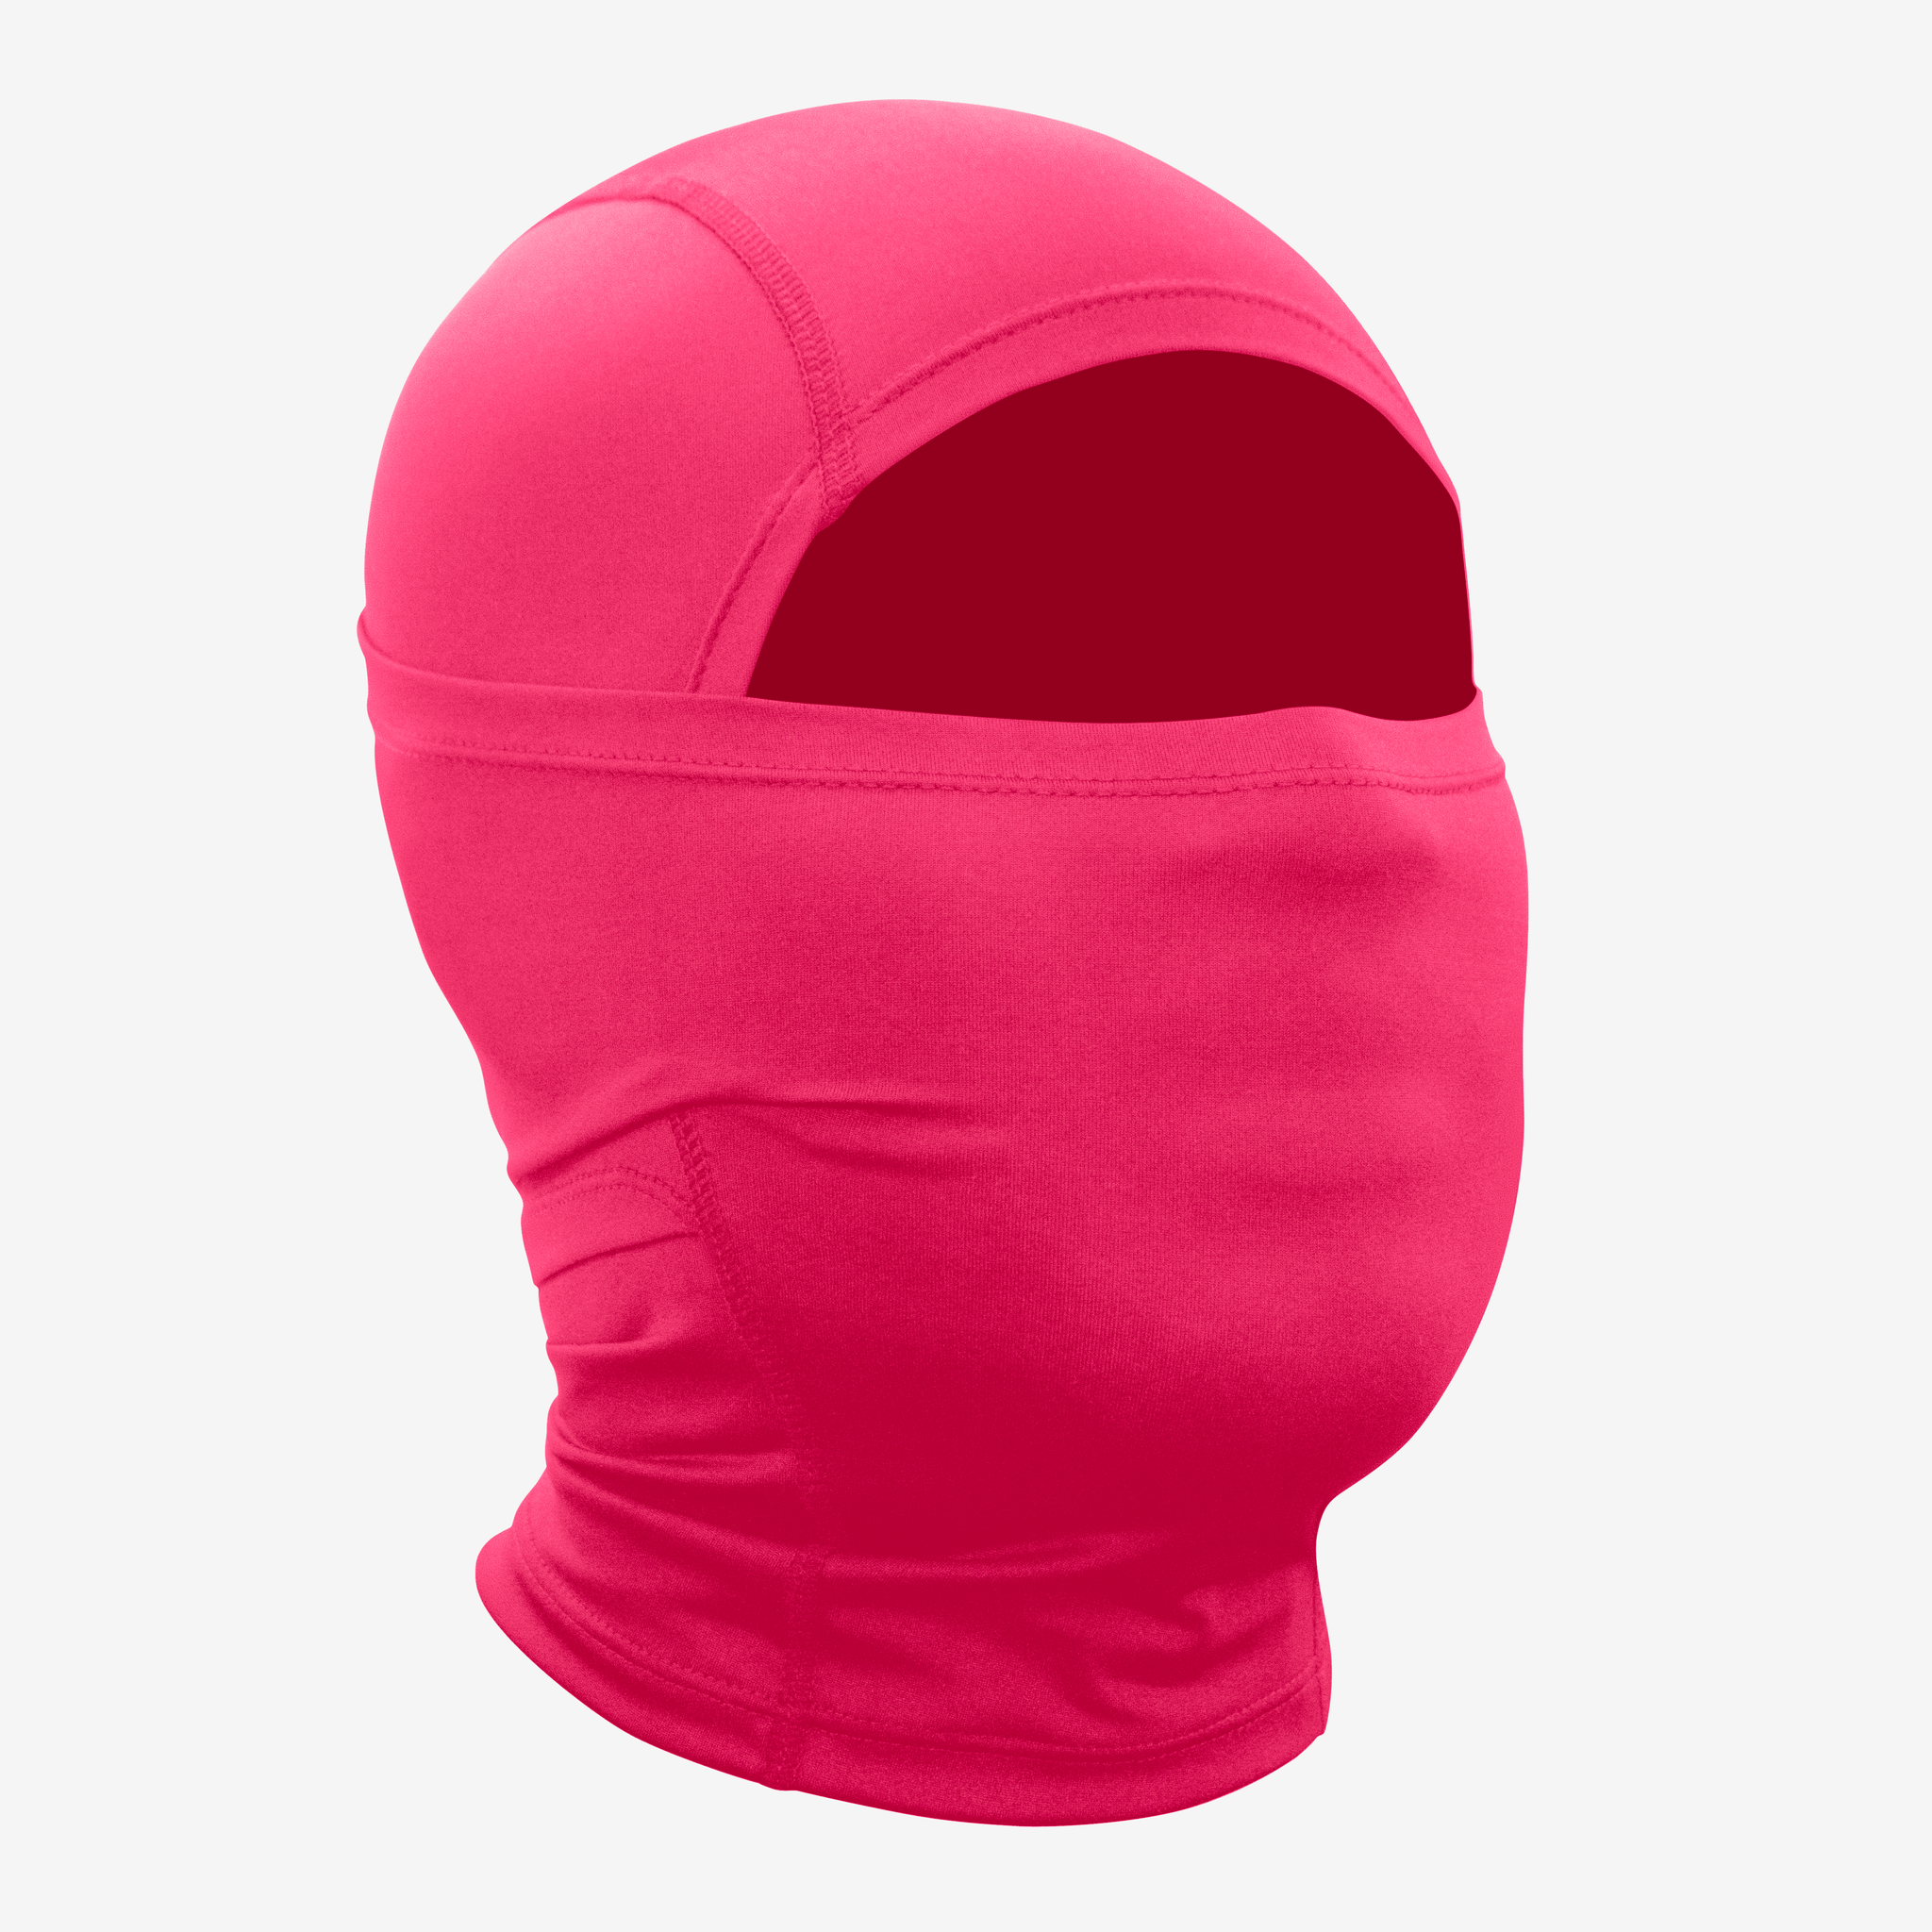 Hue Pink Shiesty Mask  Playing football, Men's balaclava, Outdoor gym